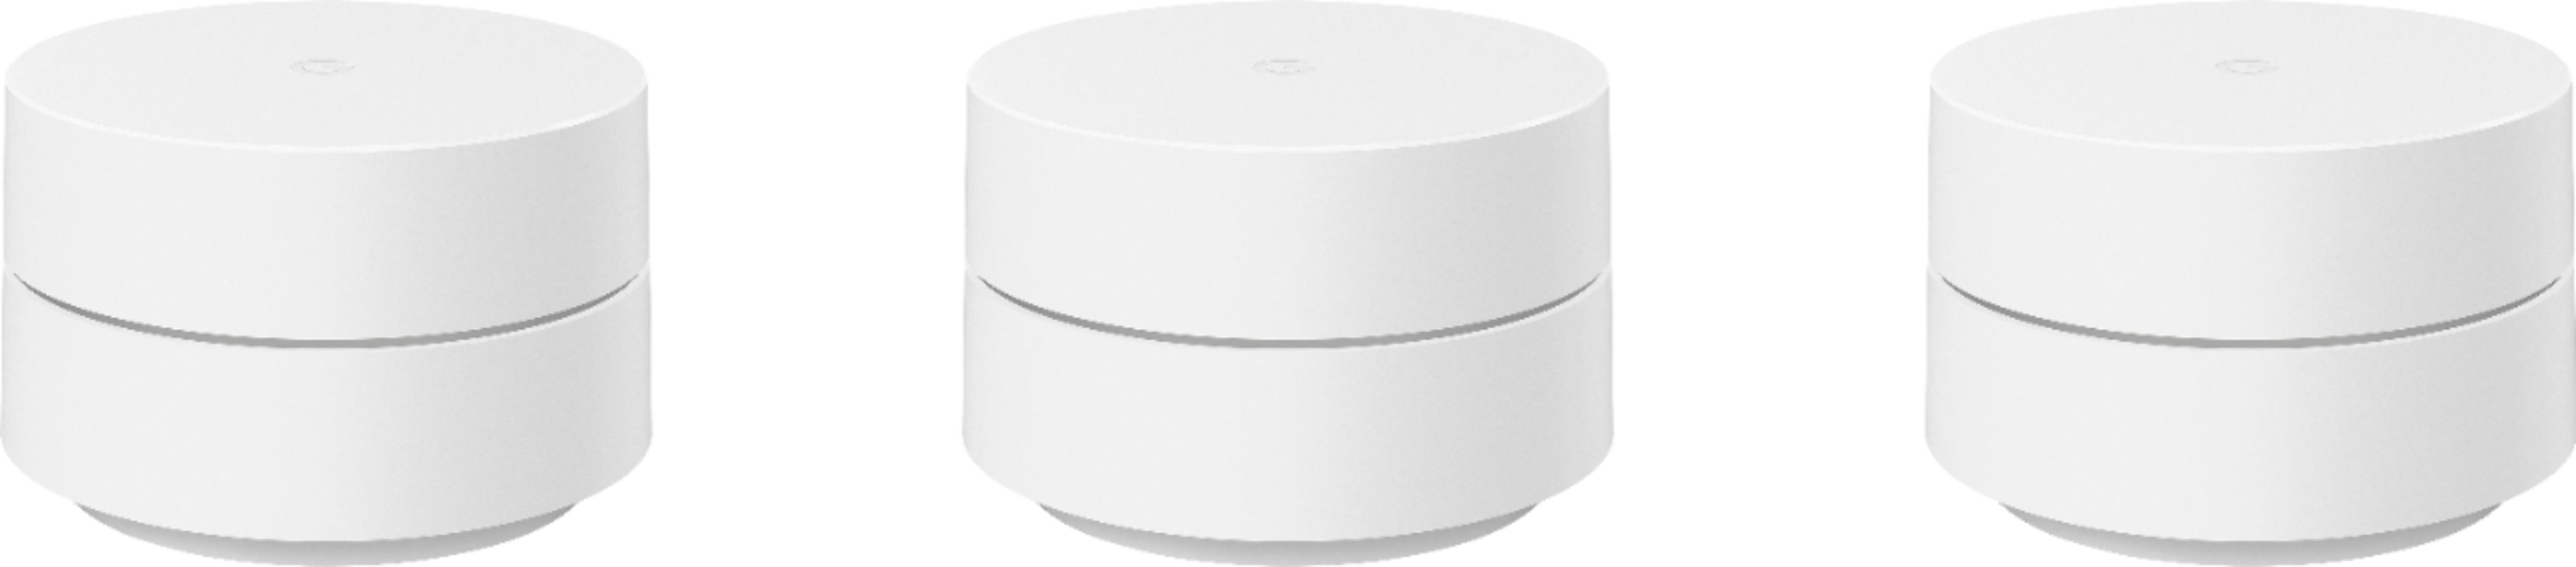 skygge alliance fajance Google Wifi Mesh Router (AC1200) 3 pack White GA02434-US - Best Buy